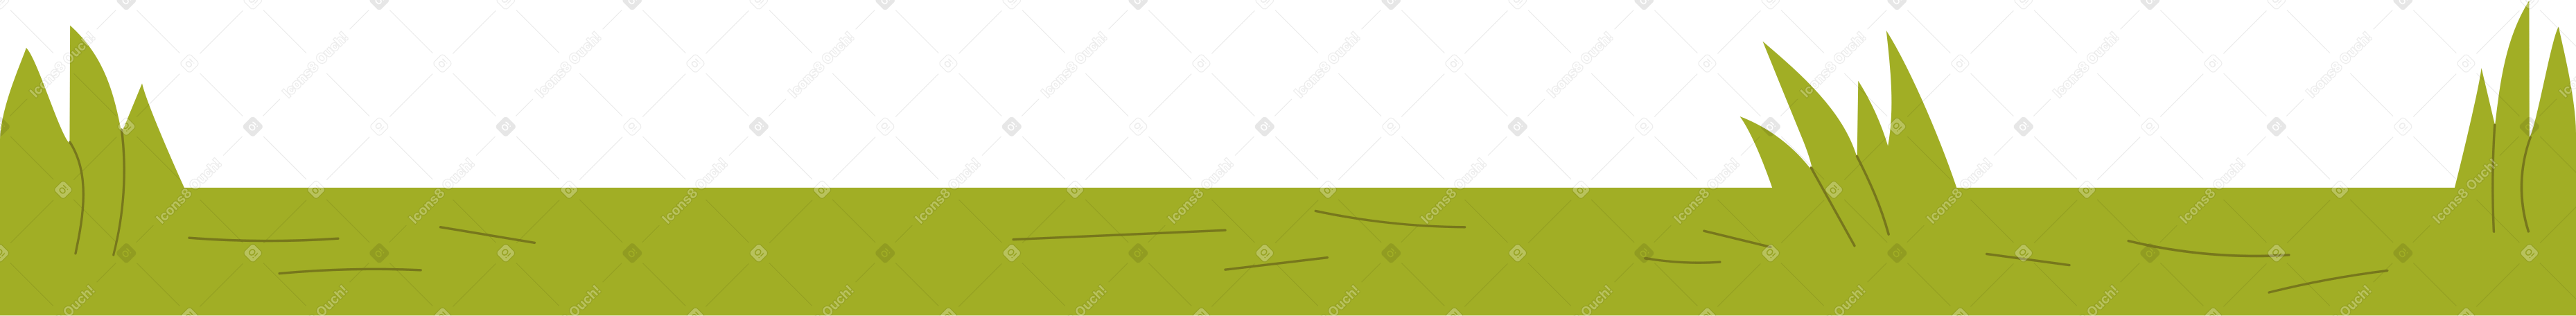 background grass Illustration in PNG, SVG